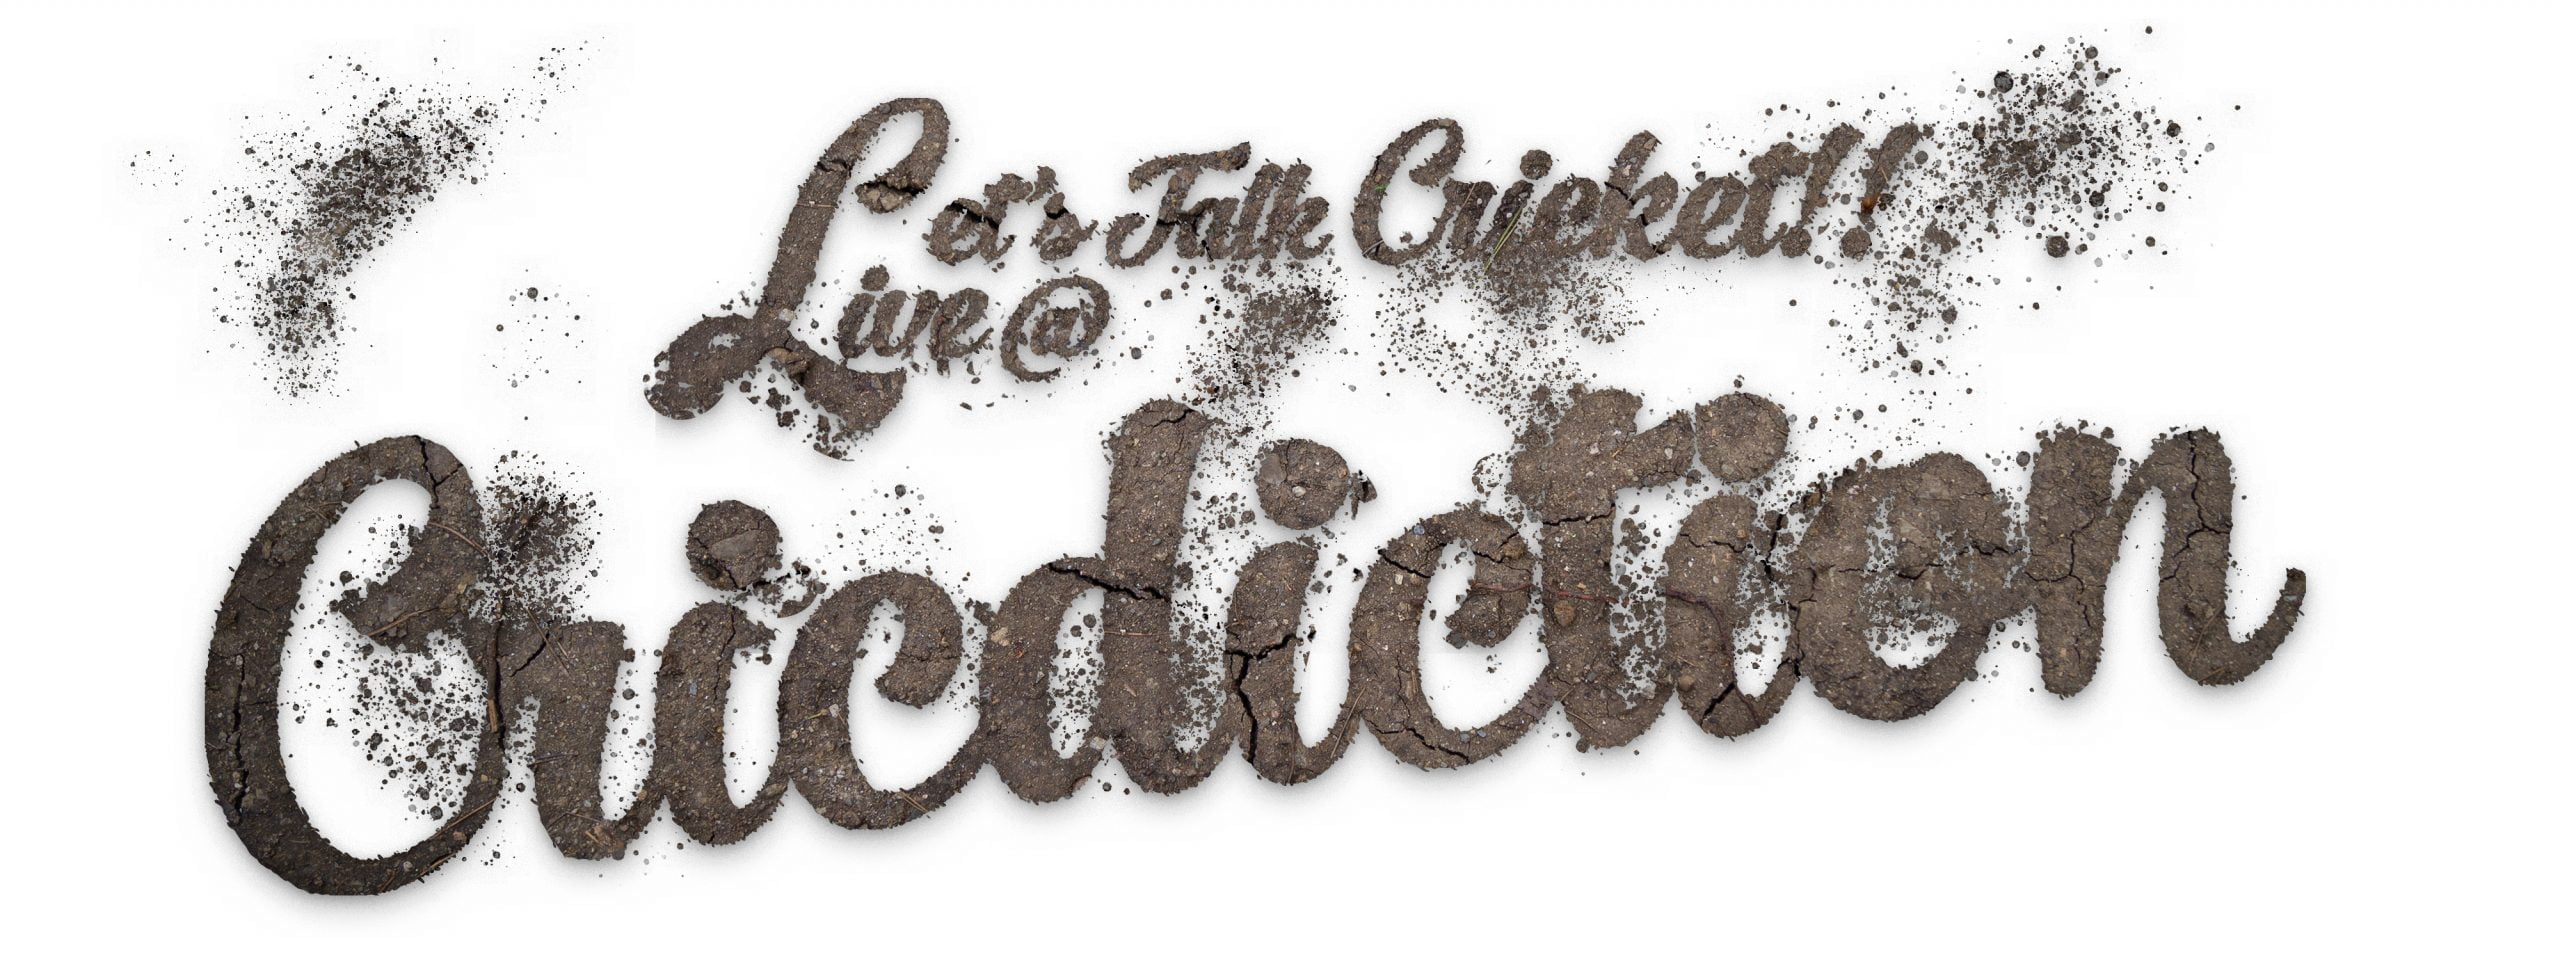 Cricket Live @ CRICDICTION